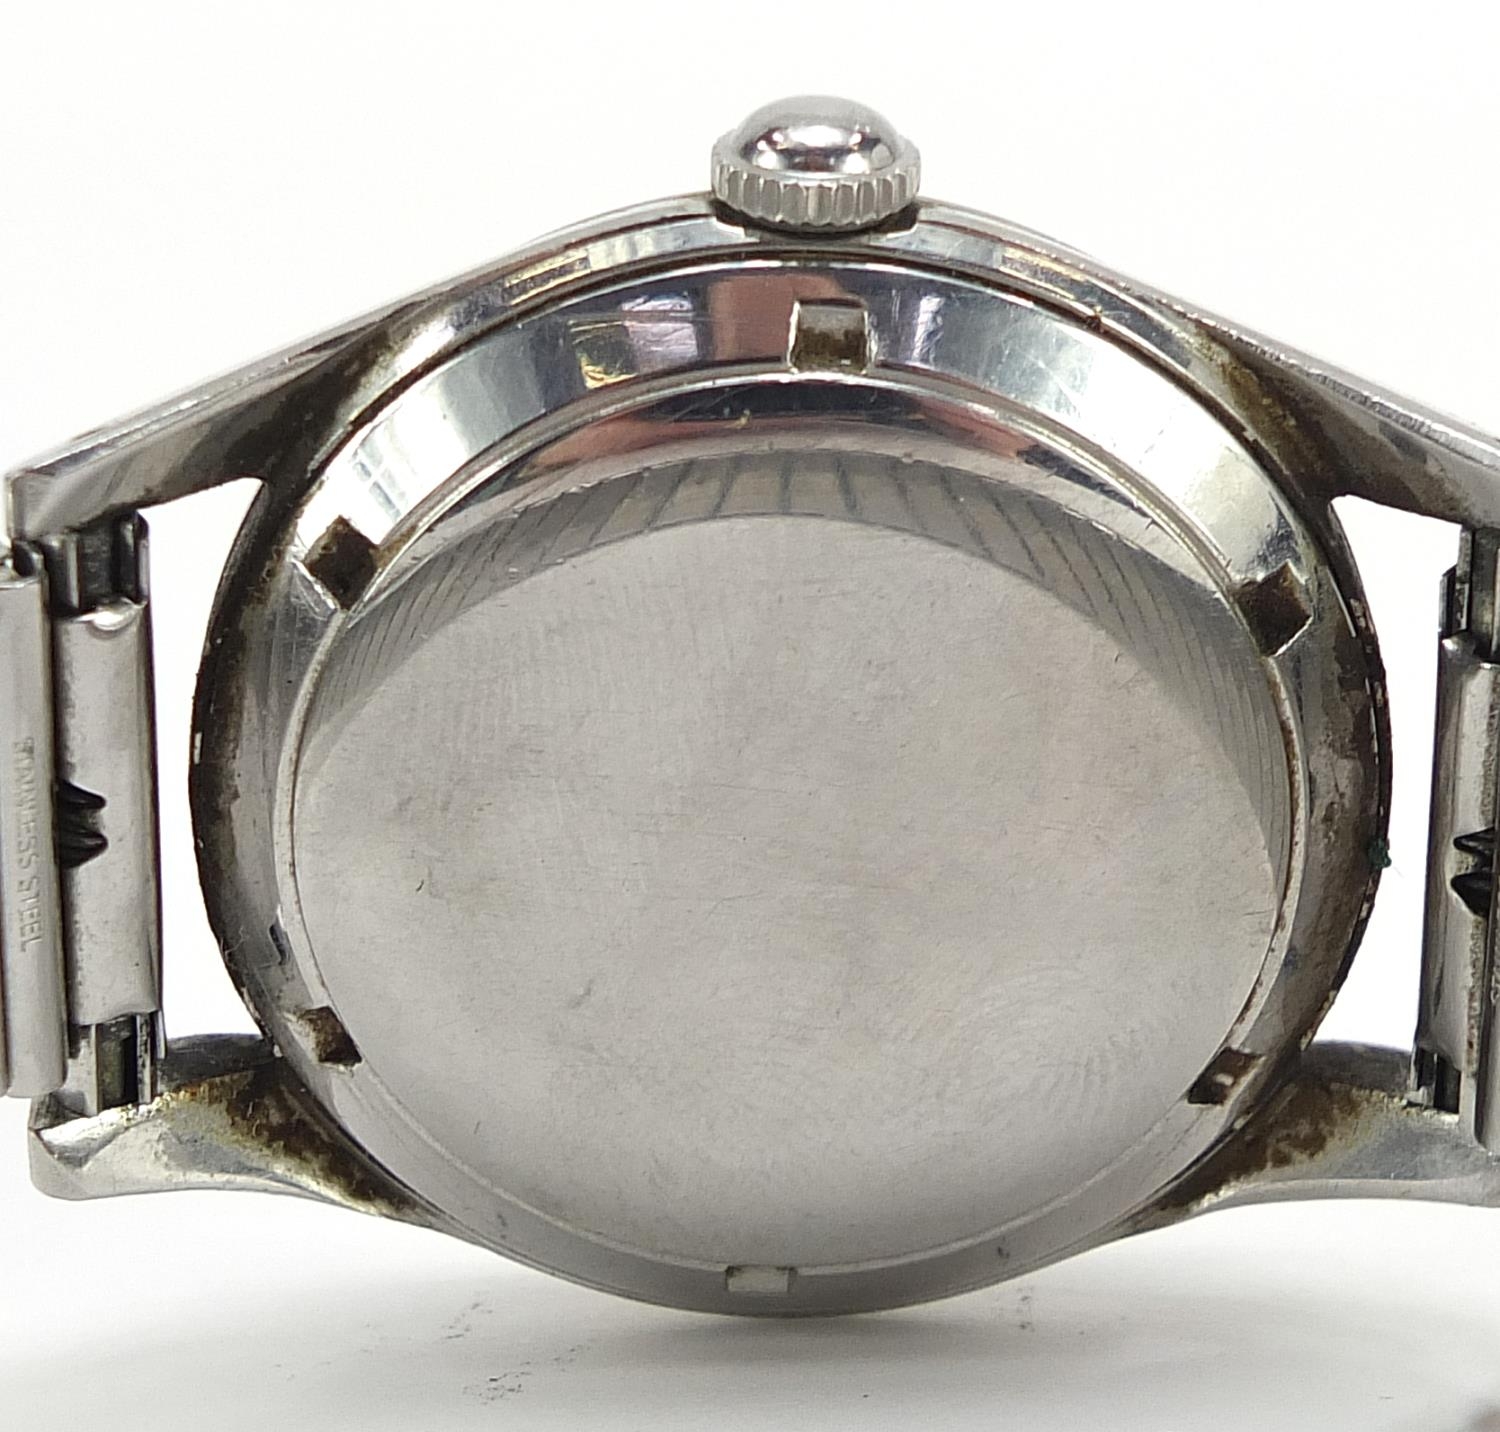 Girard-Perregaux, vintage gentlemen's Gyromatic wristwatch, 32mm in diameter - Image 3 of 5